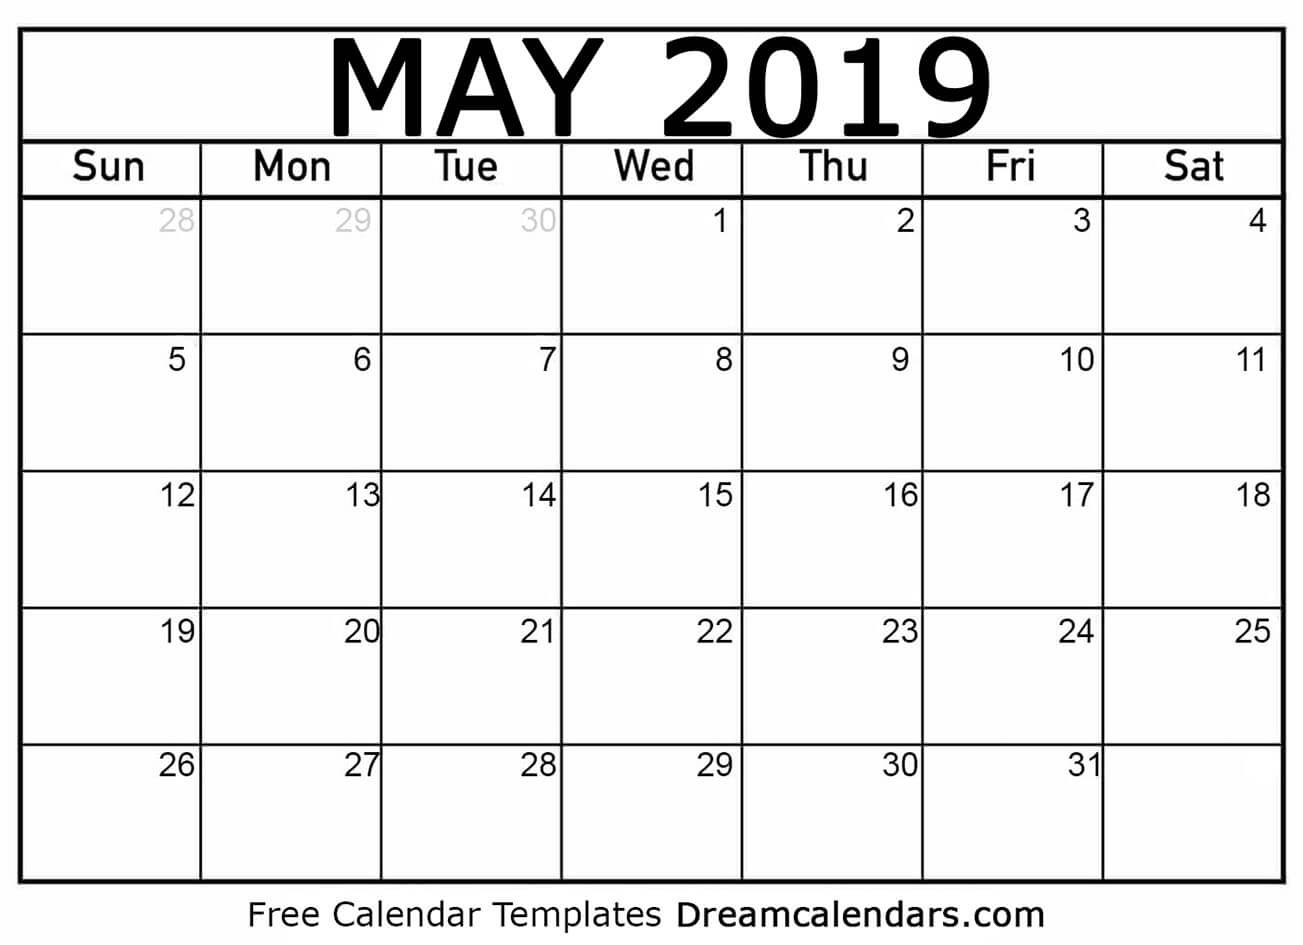 dream-calendars-make-your-calendar-template-blog-blank-printable-may-2019-calendar